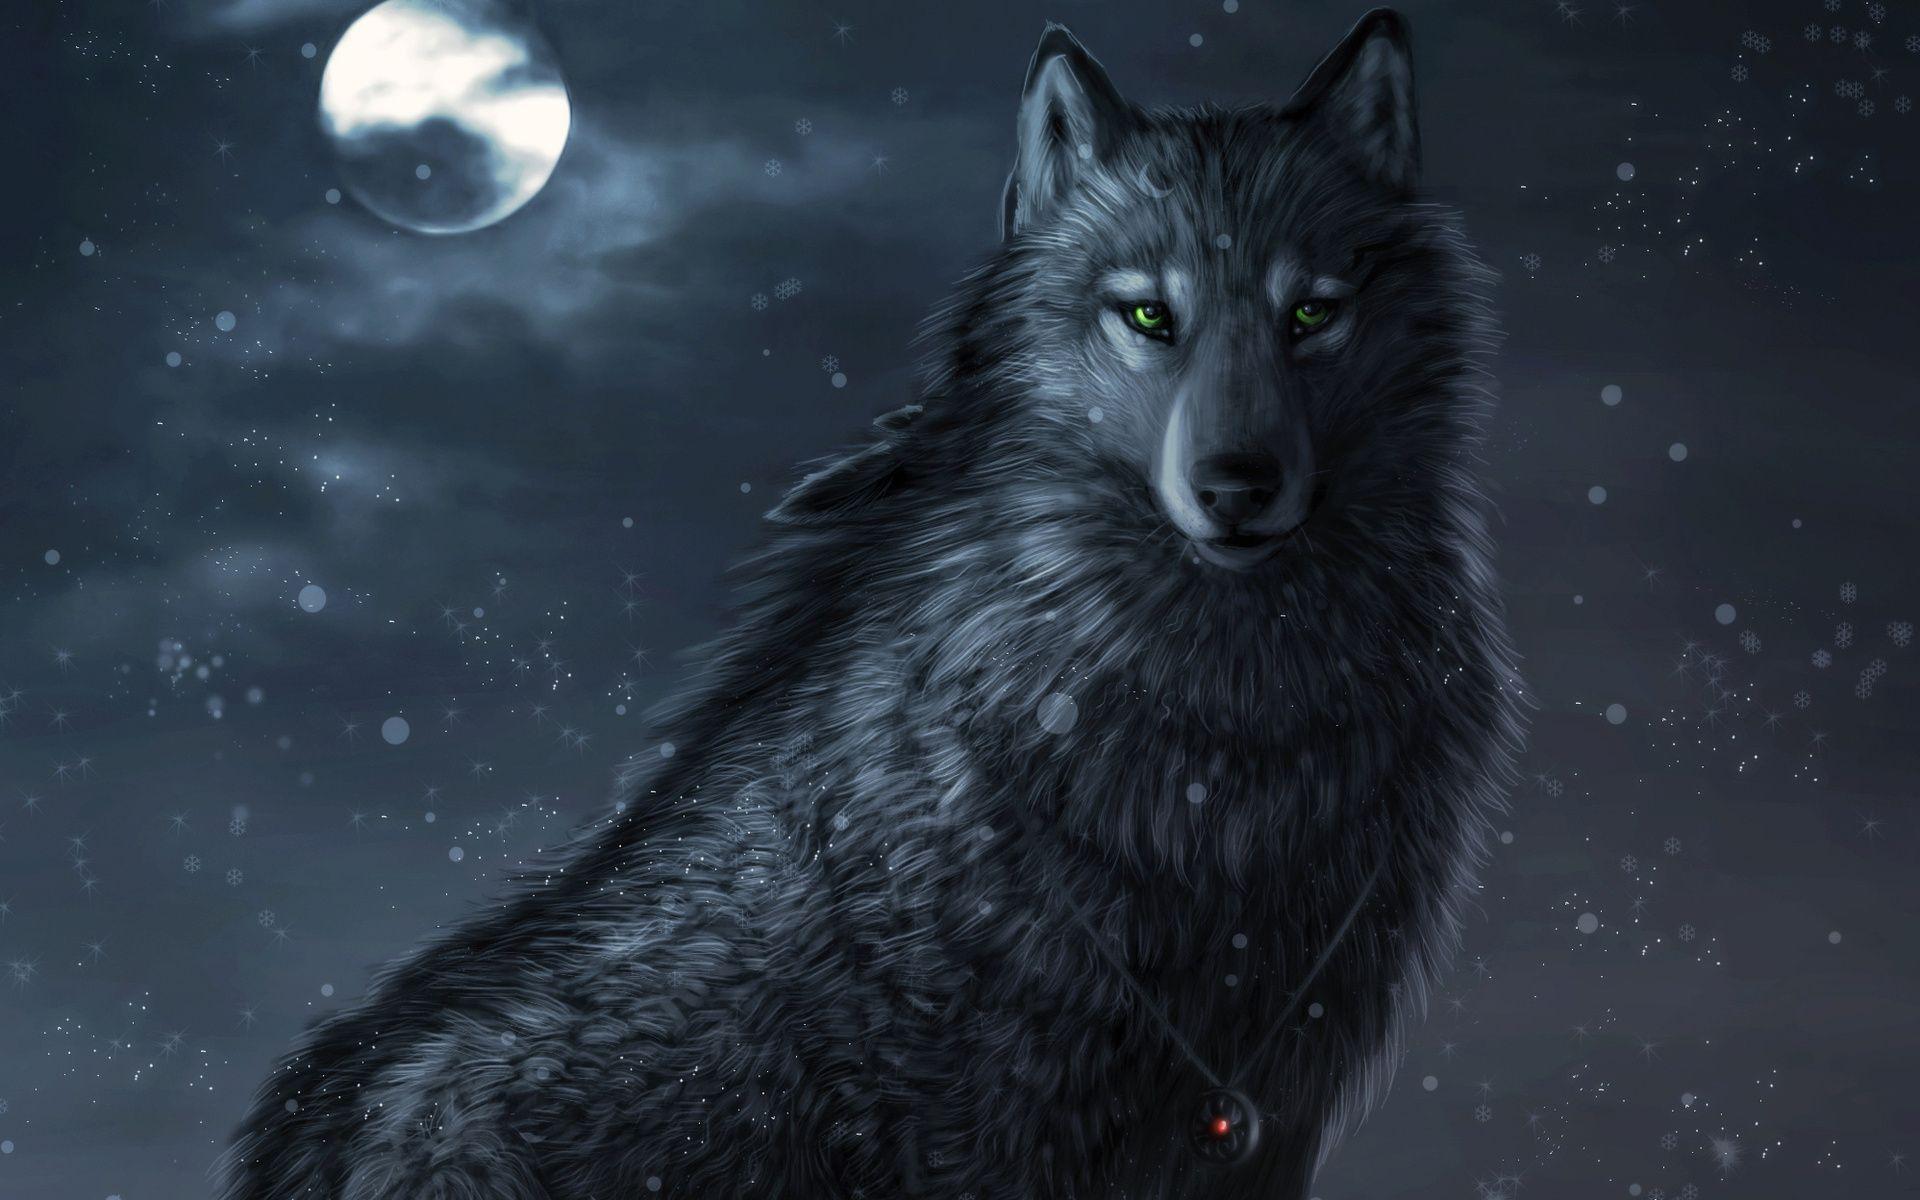 Featured image of post 1080P Night Wolf Wallpaper Hd Desktop wolf wallpaper hd 1920 1080